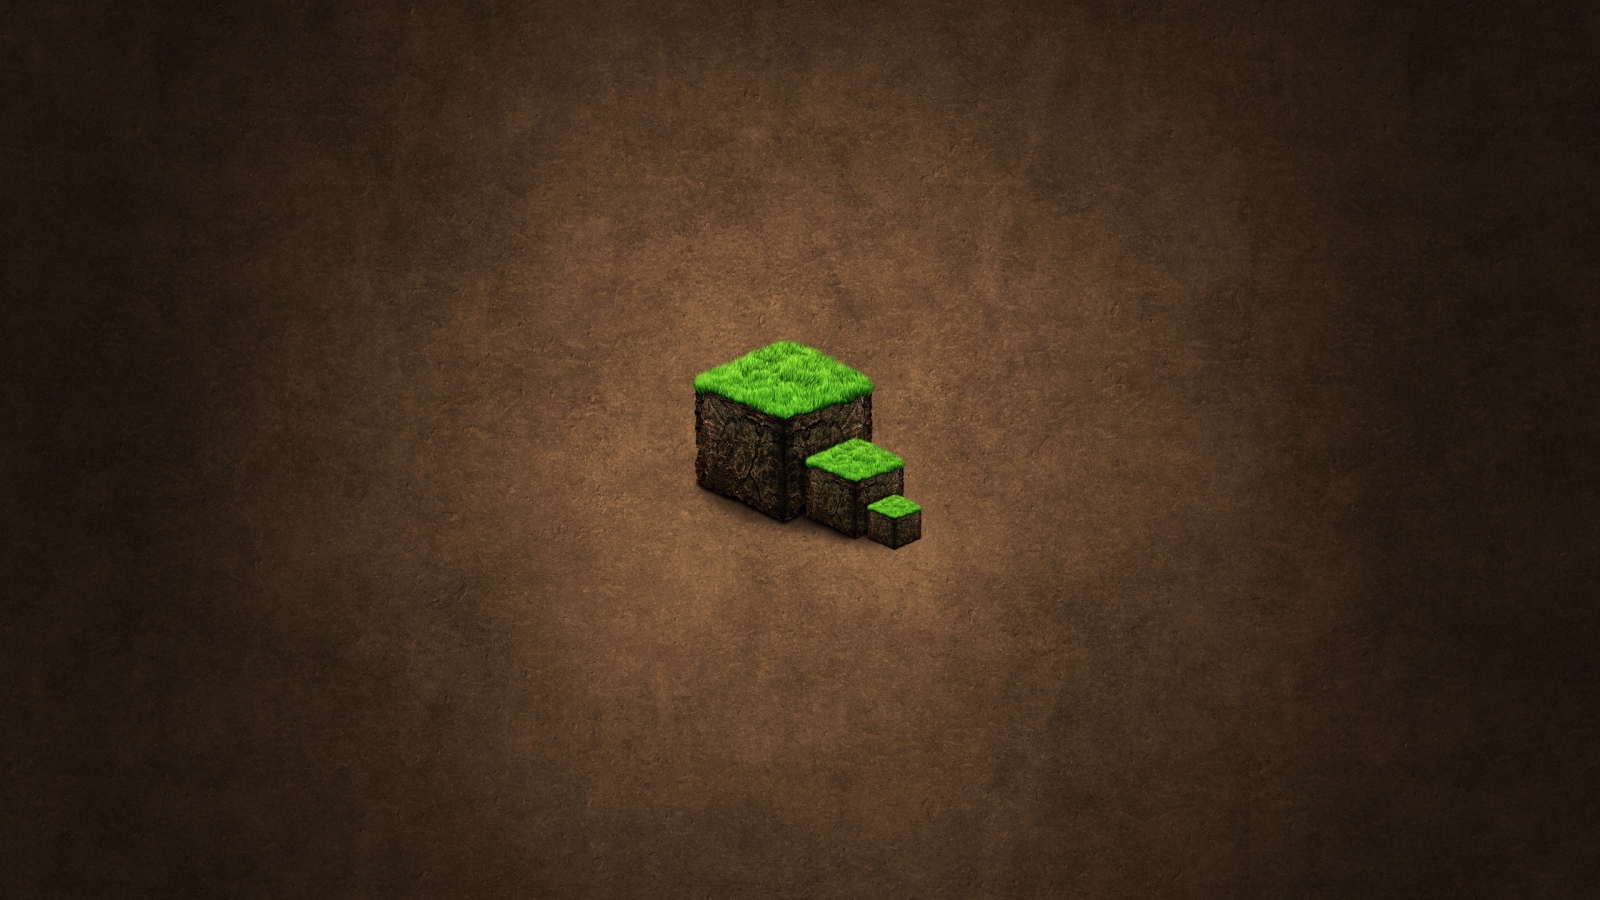 Minecraft Green Cubes for 1600 x 900 HDTV resolution